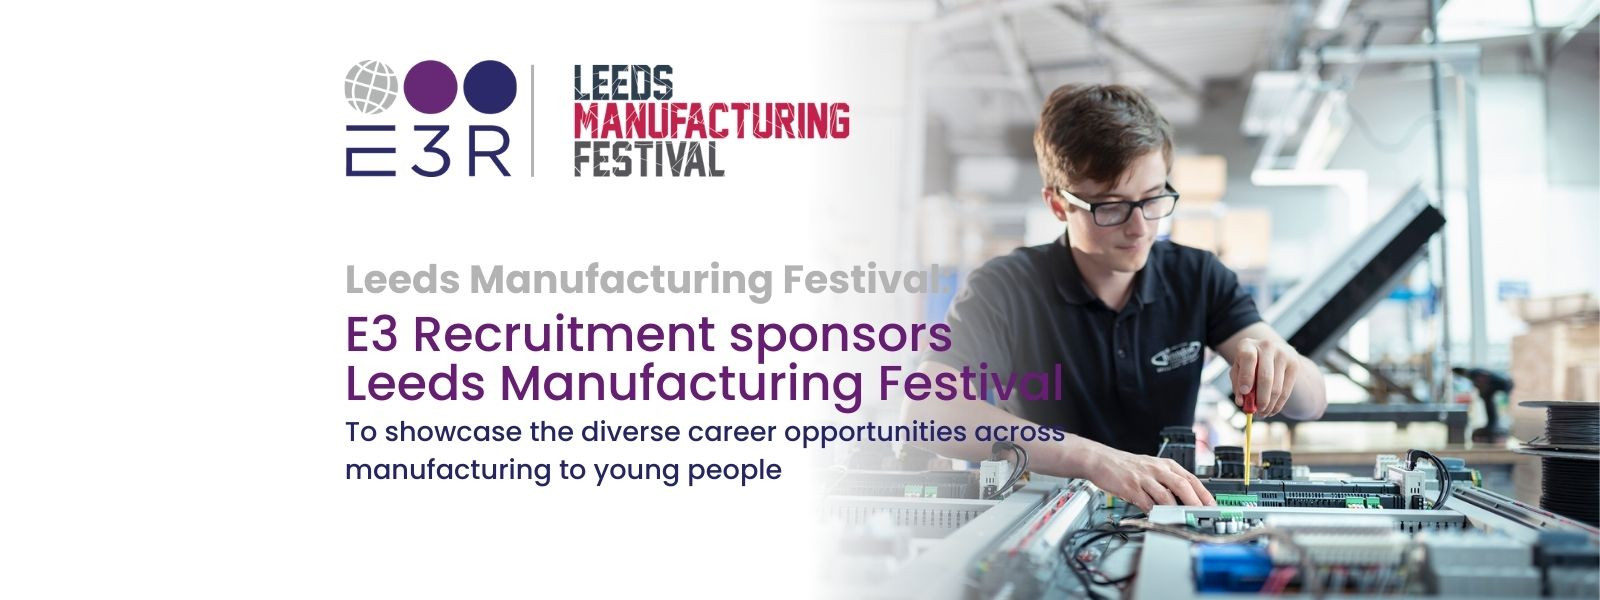 E3 Recruitment Sponsors Leeds Manufacturing Festiv...